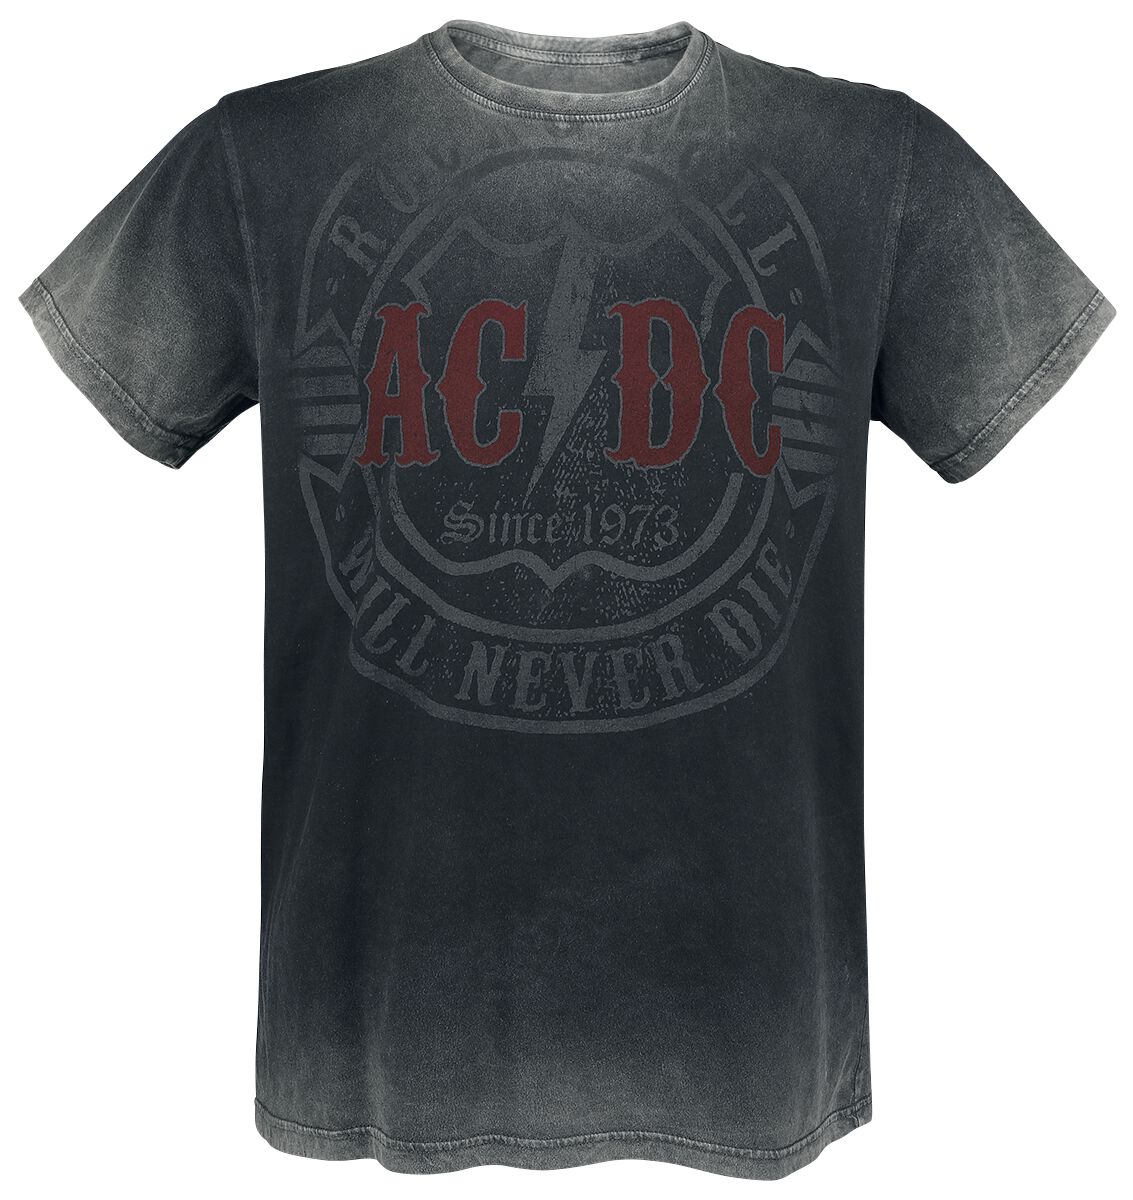 AC/DC Rock & Roll - Will Never Die T-Shirt dunkelgrau in 4XL